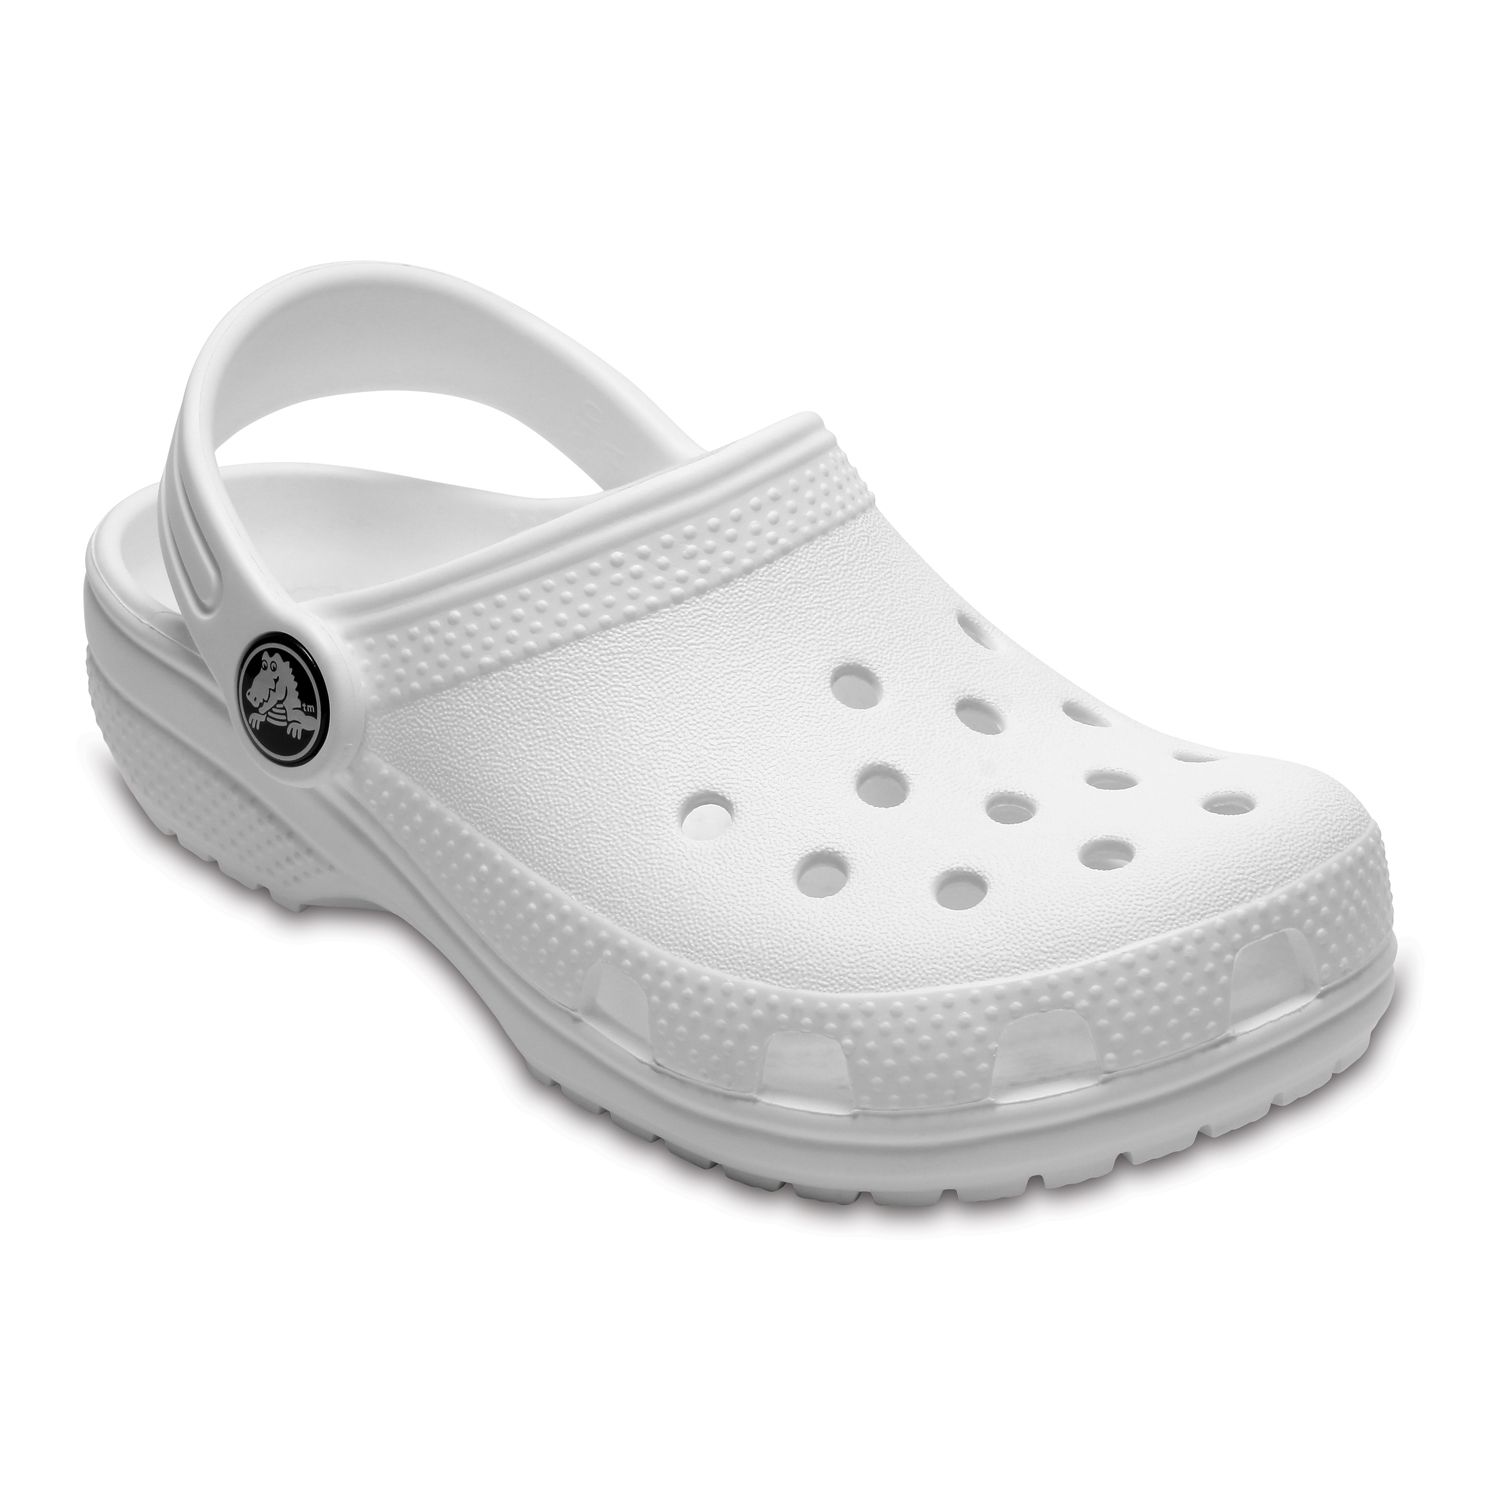 girls crocs size 9